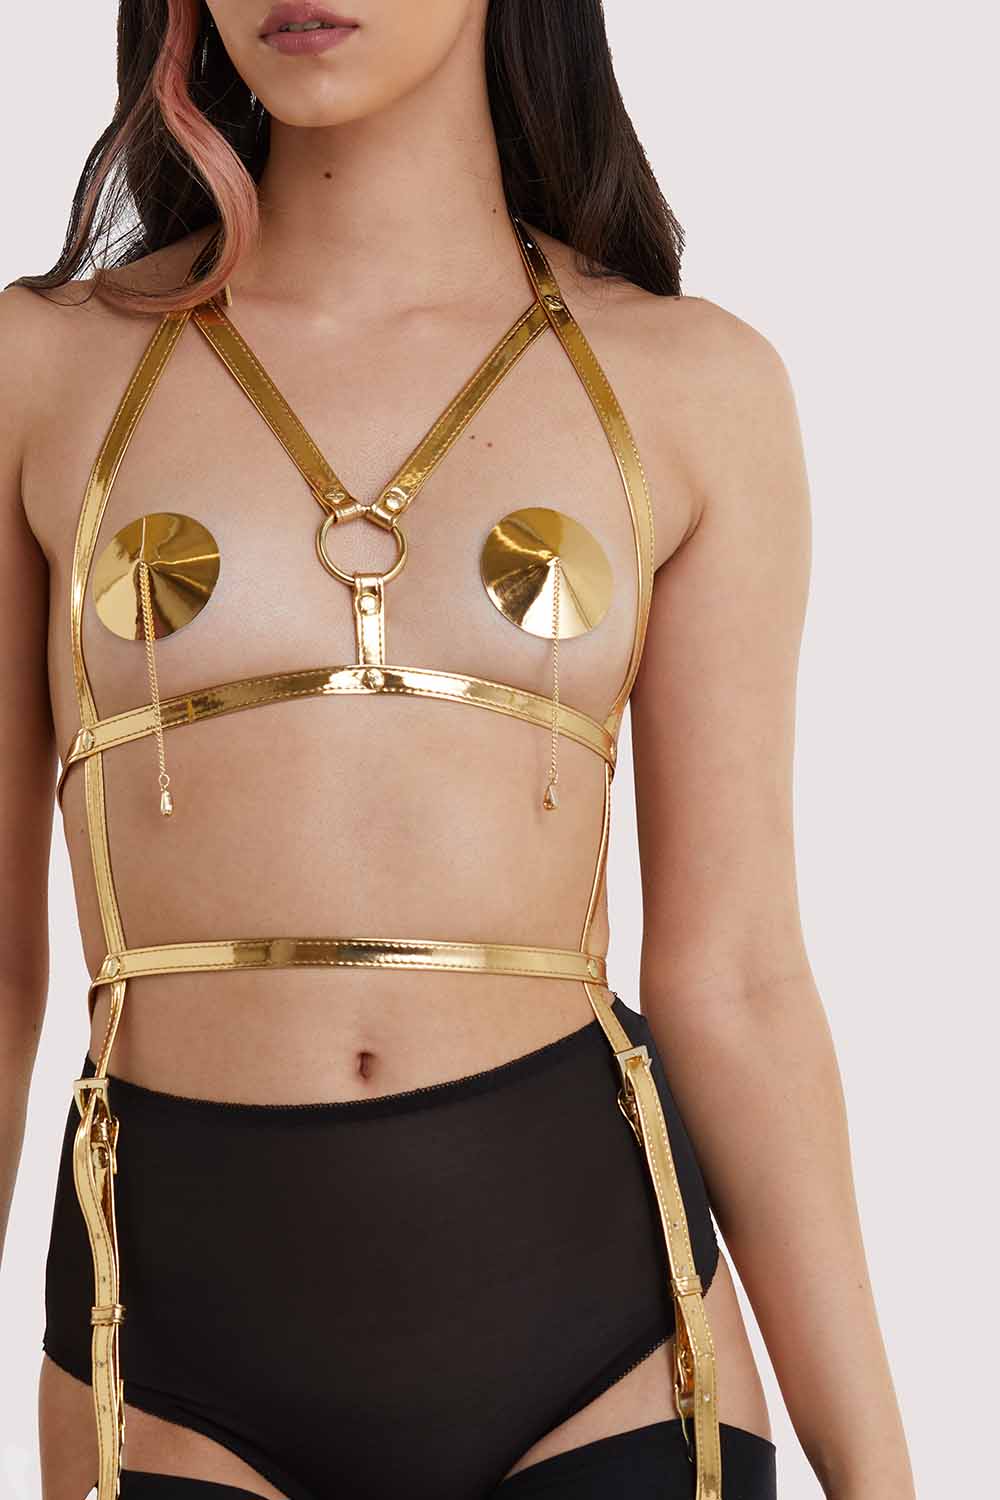 Bad Star Lingerie on X: Gold Moon Harness 🌌🌌🔮🔮 #golden #gold #harness  #boudoir #romantic #lingerieaddict #frenchlingerie #instalingerie #lace  #frenchlace #cagebra #elegant #bralette #lingerielife #lingerieoftheday  #luxurylingerie #lingerieaddicted